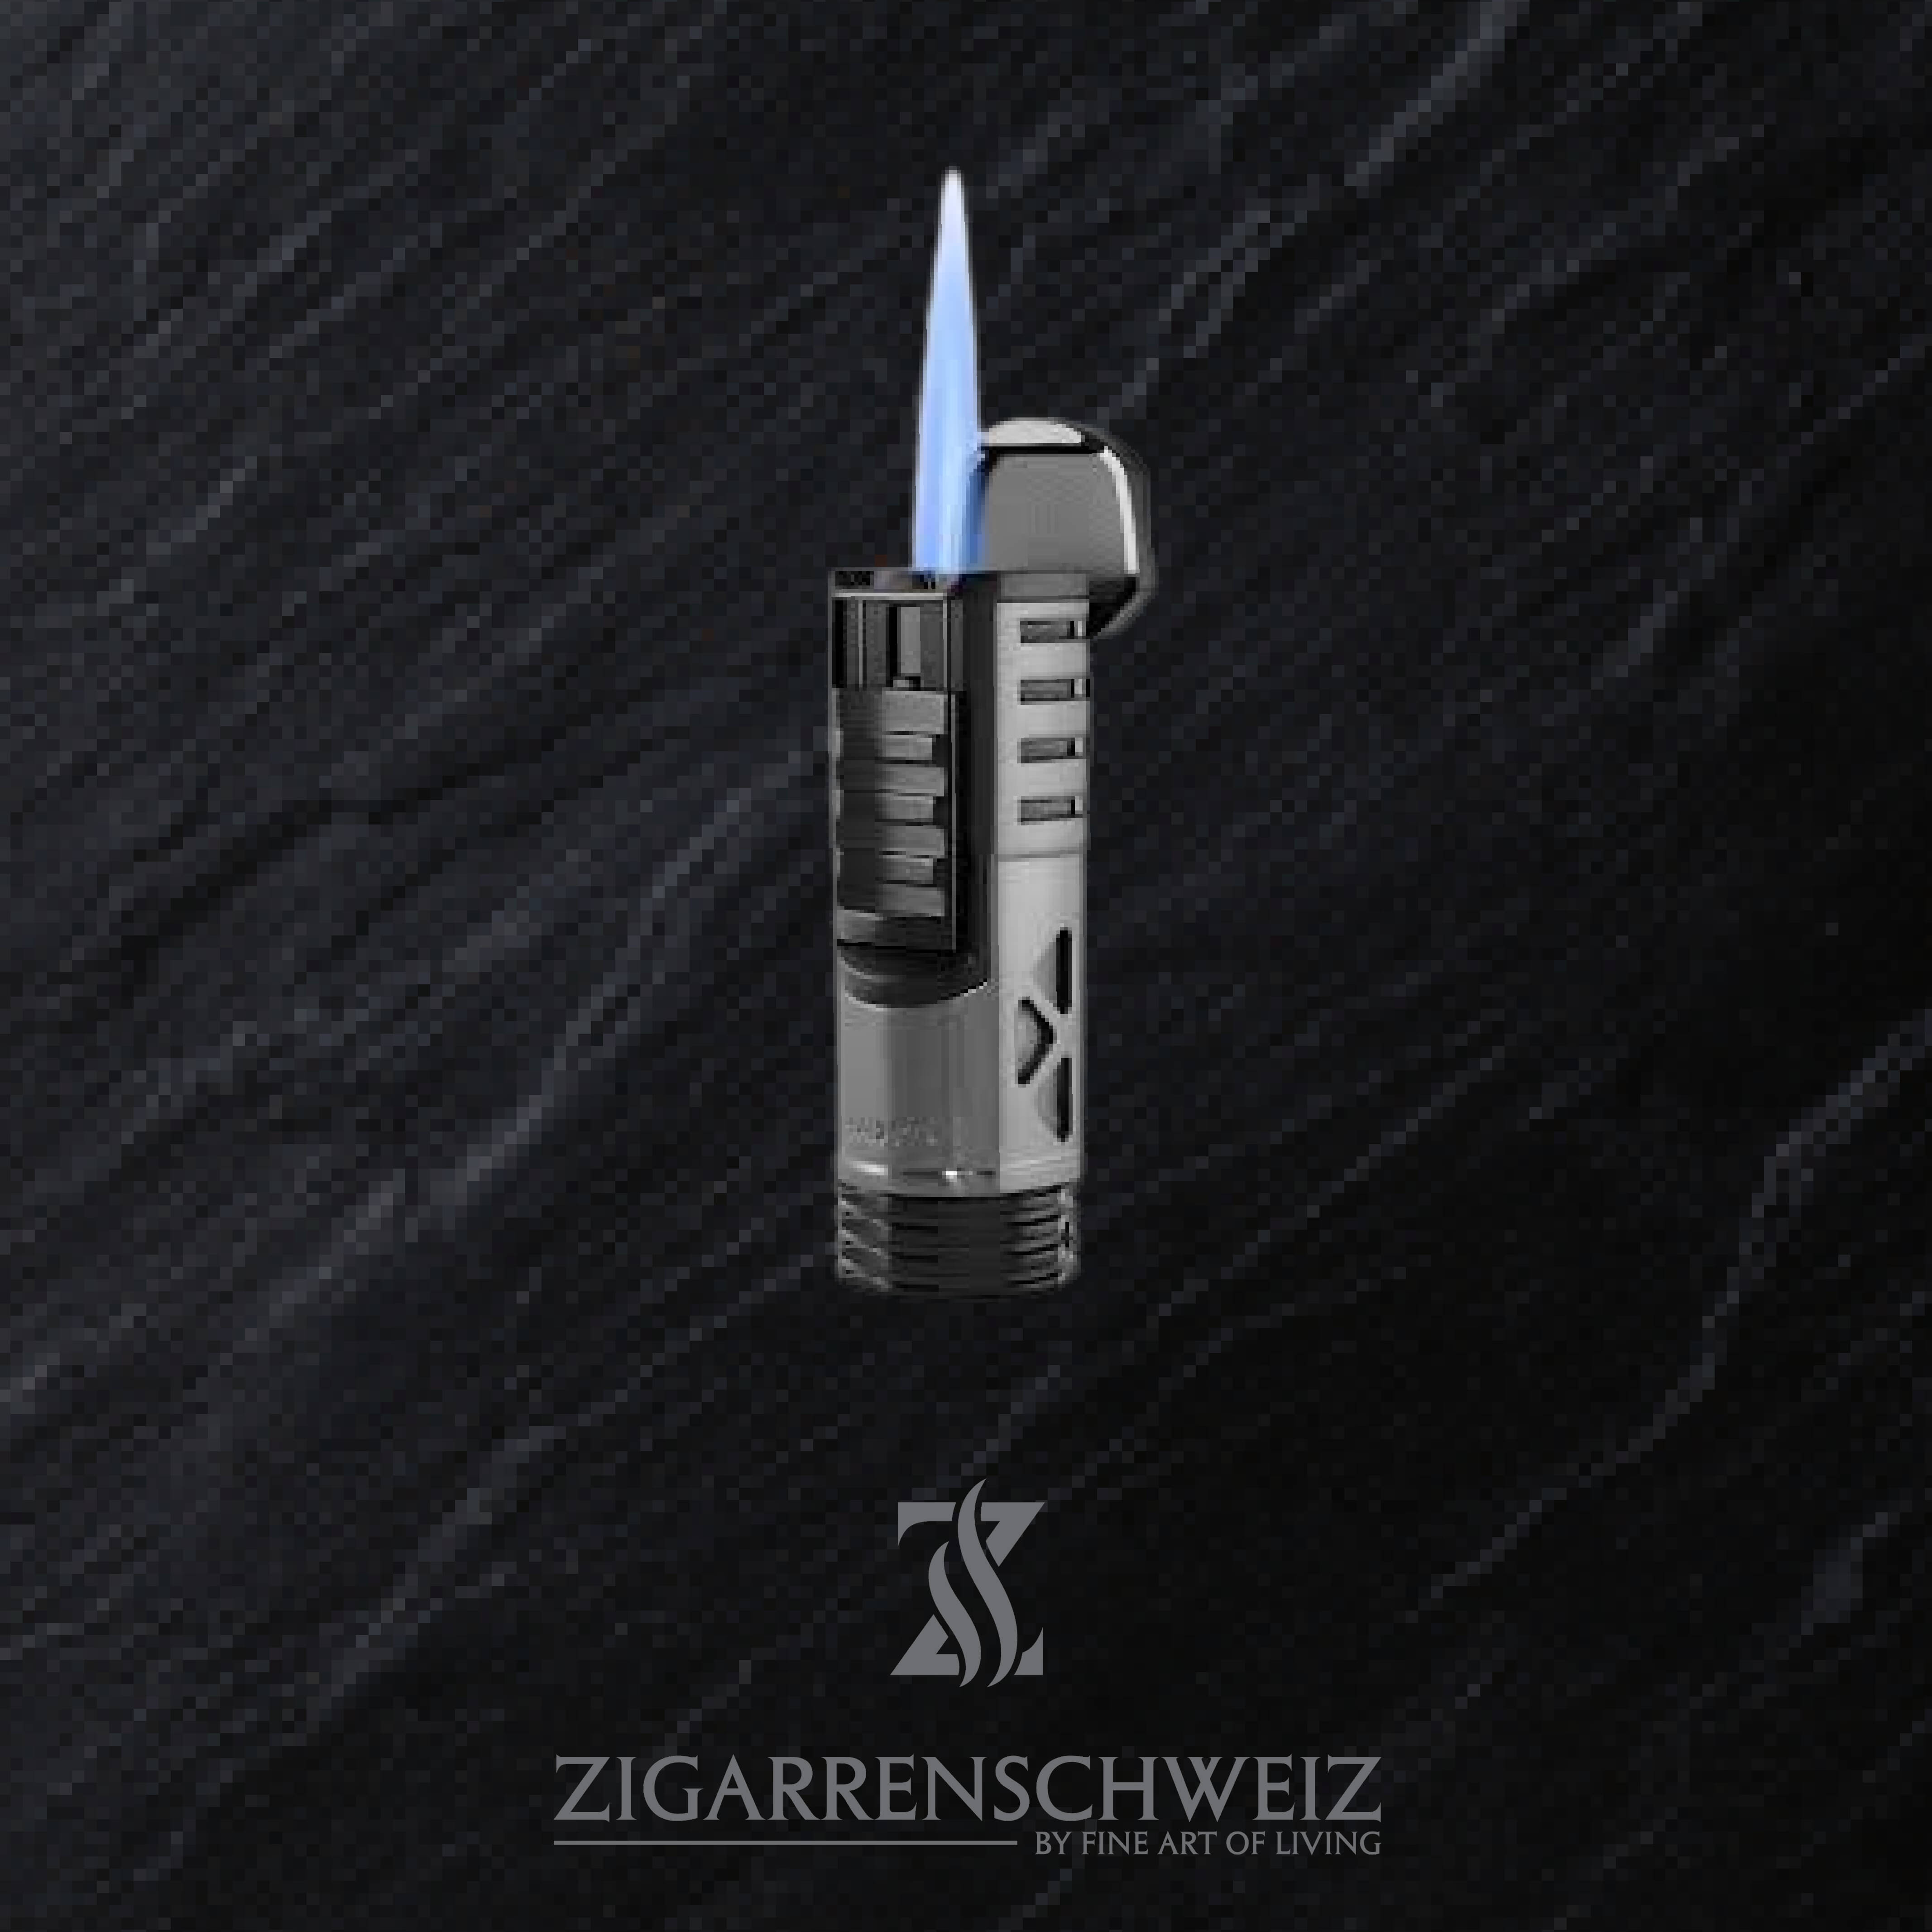 Xikar Tactical 1 Single Jet Flame Feuerzeug für Zigarren, Deckel geöffnet mit Jet Flame Flamme / Farbe: Gun Metal